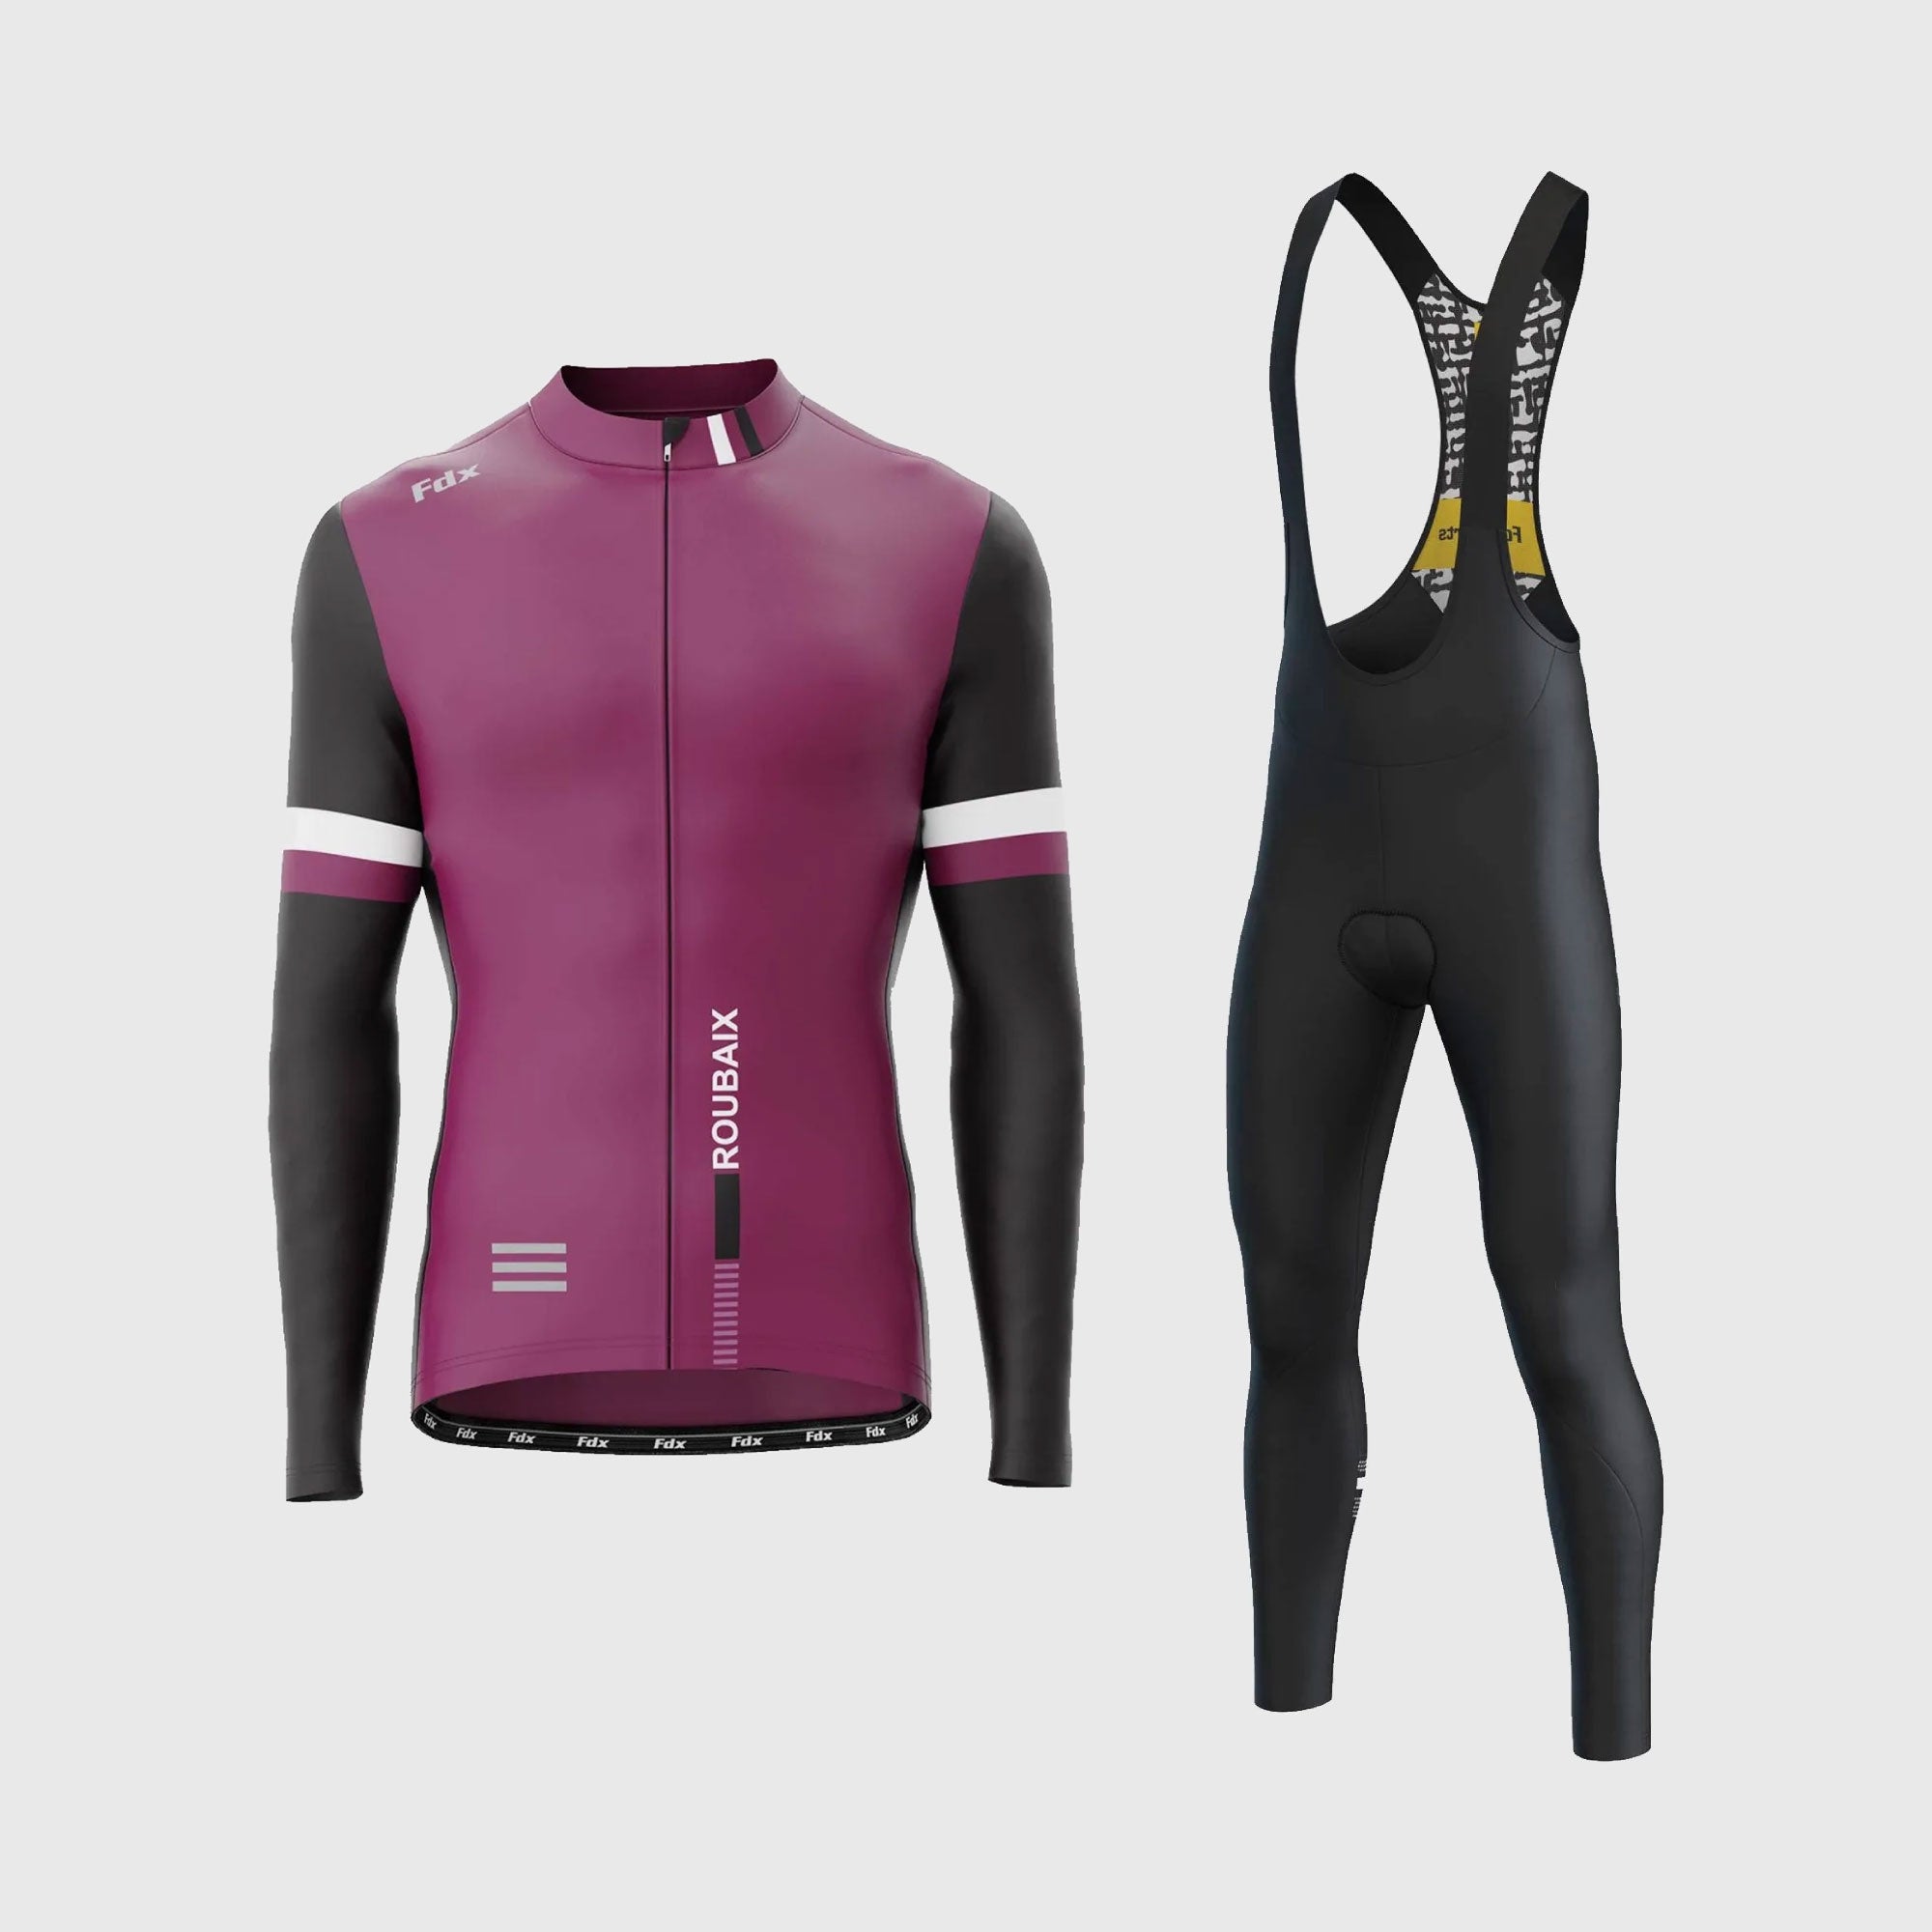 Fdx Men's Set Limited Edition Thermal Roubaix Long Sleeve Cycling Jersey & Bib Tights - Purple